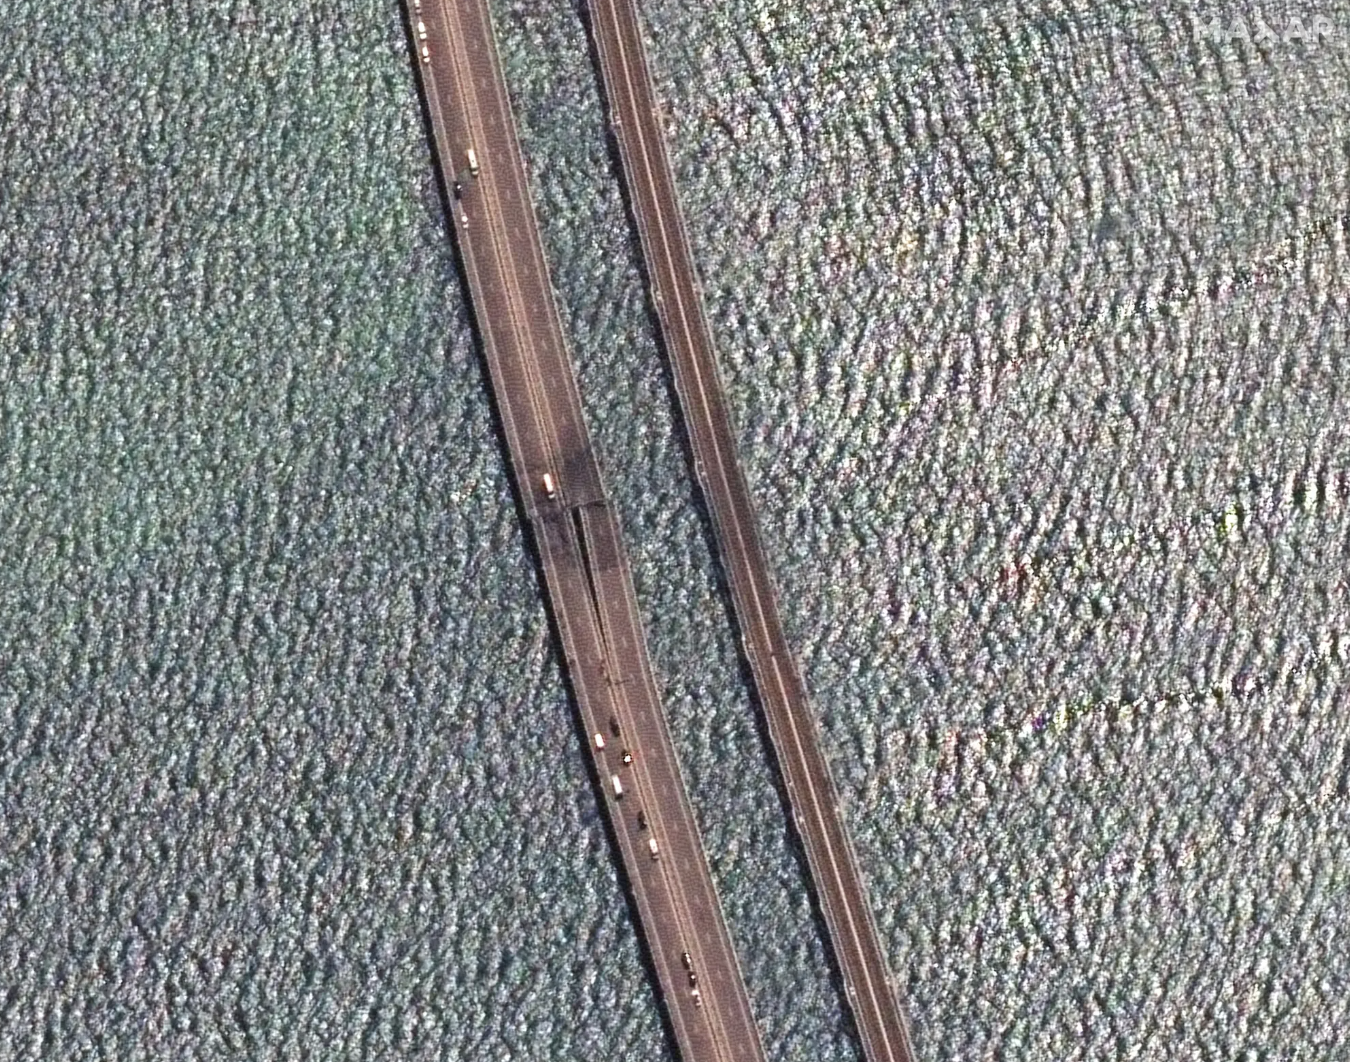 Close-up view of the damaged Kerch Bridge span. <em>Satellite image ©2023 Maxar Technologies</em>